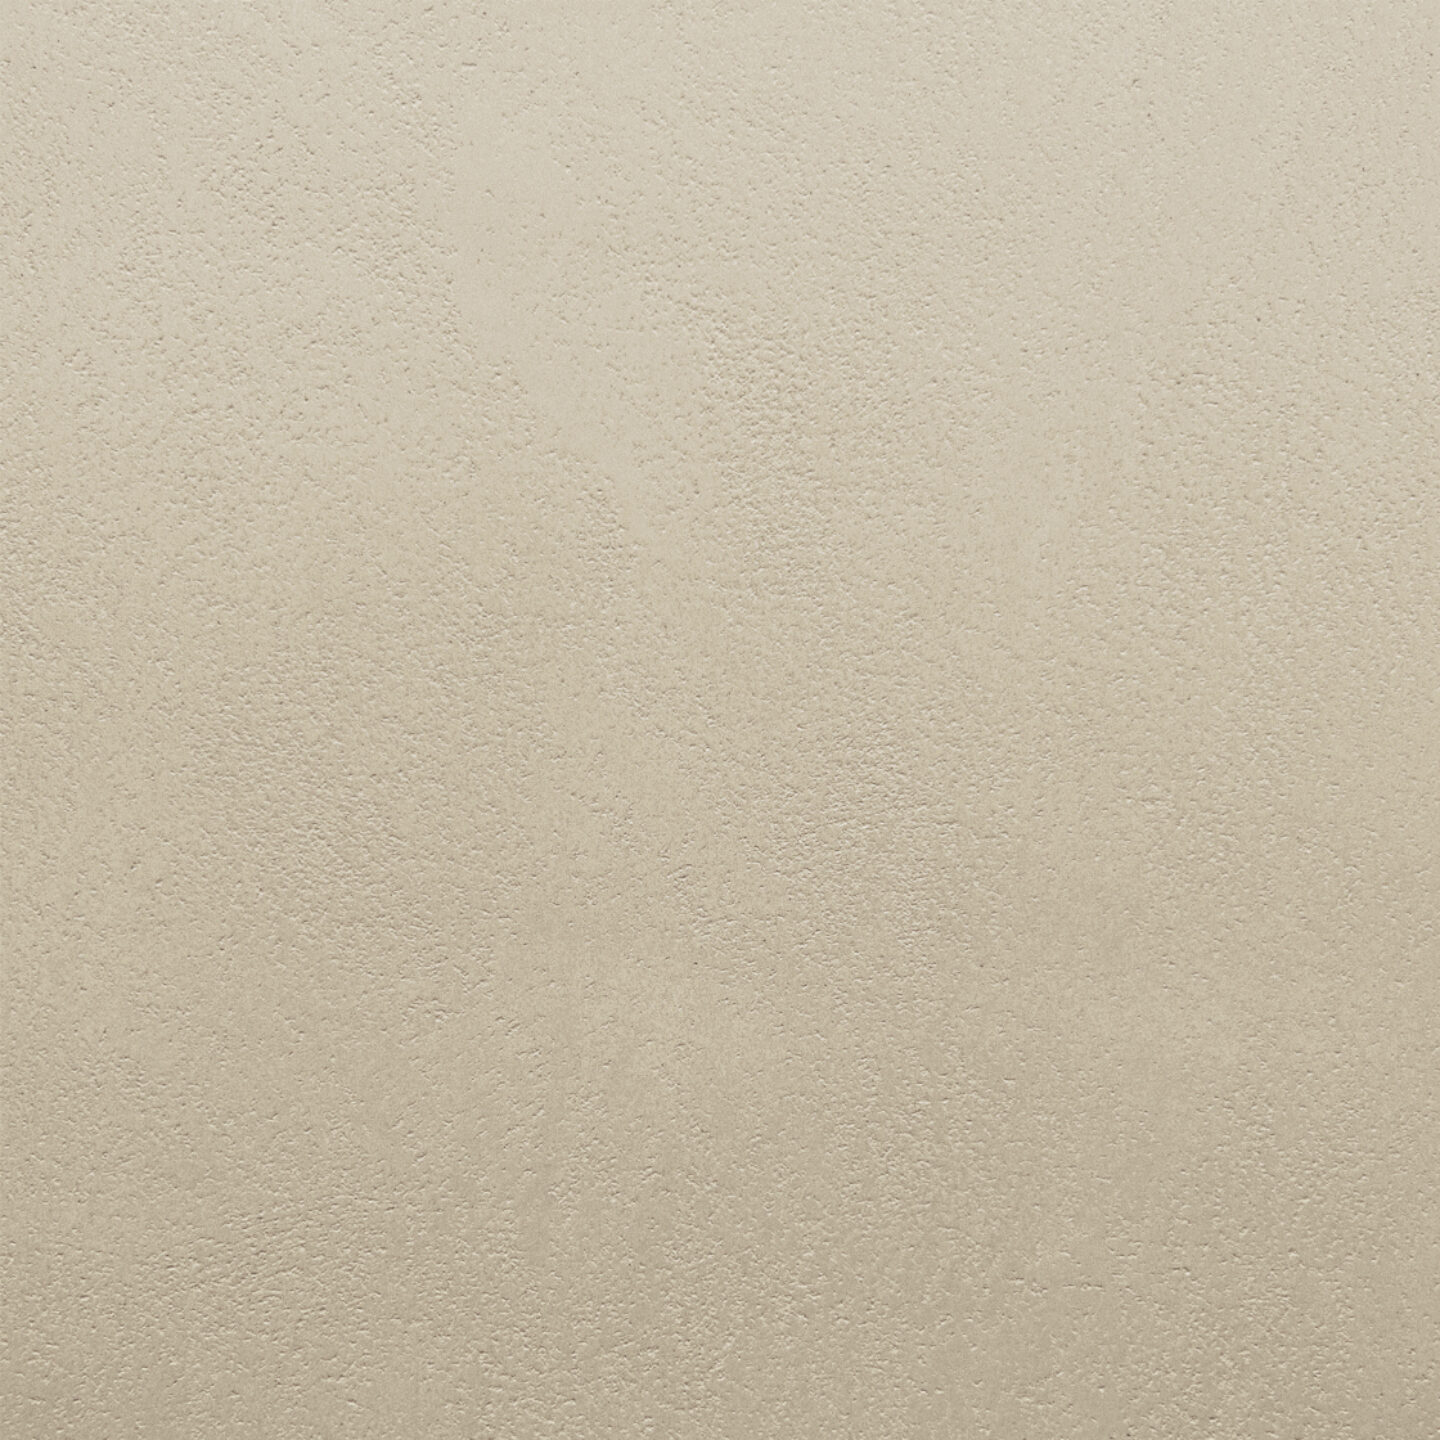 Close up of Armourcoat leatherstone exterior polished plaster finish - 47